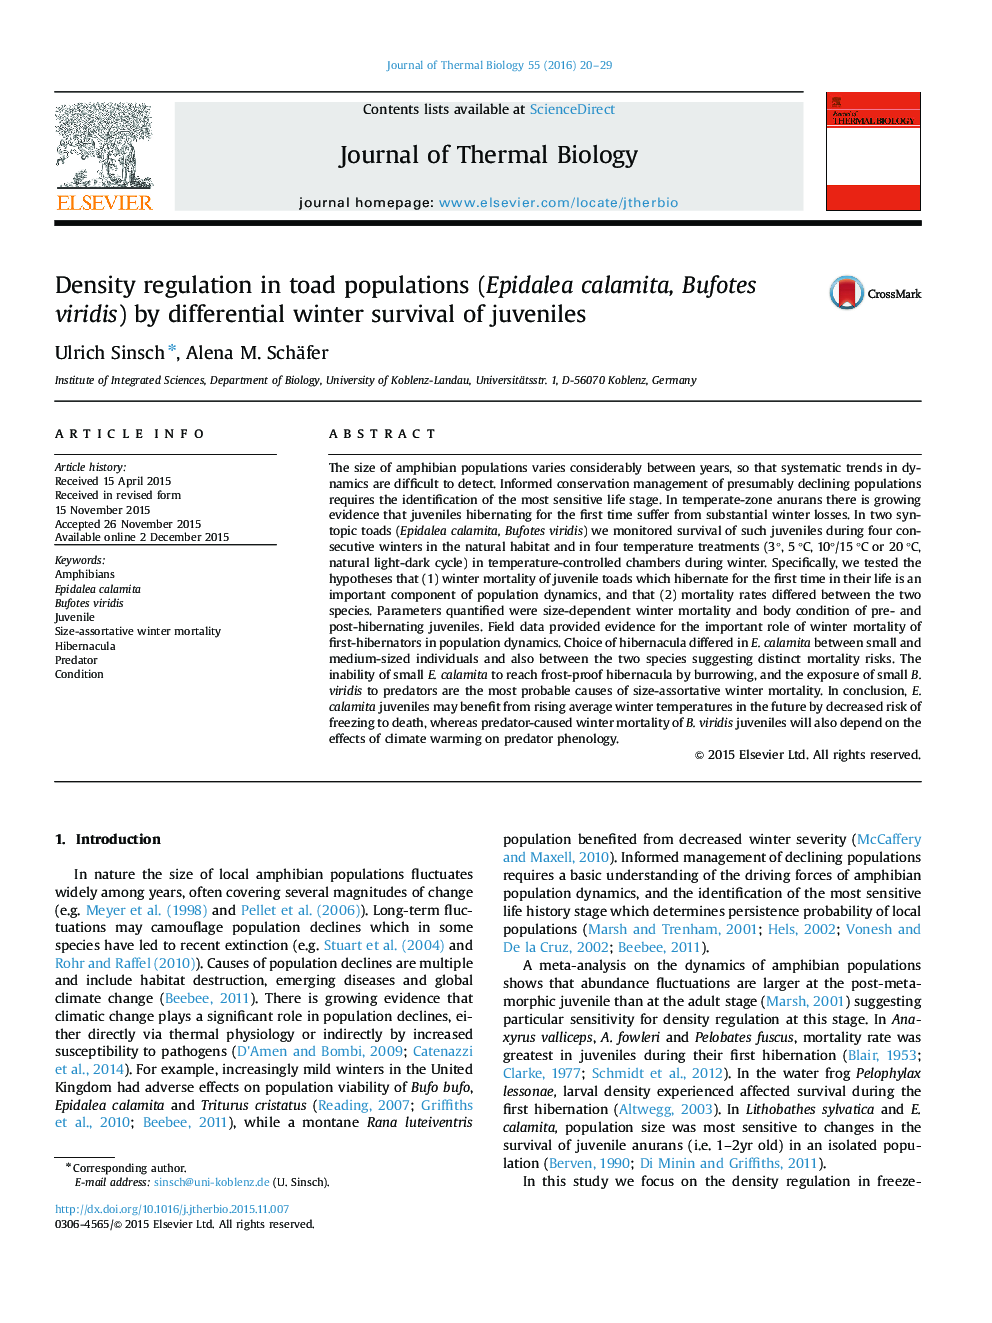 Density regulation in toad populations (Epidalea calamita, Bufotes viridis) by differential winter survival of juveniles